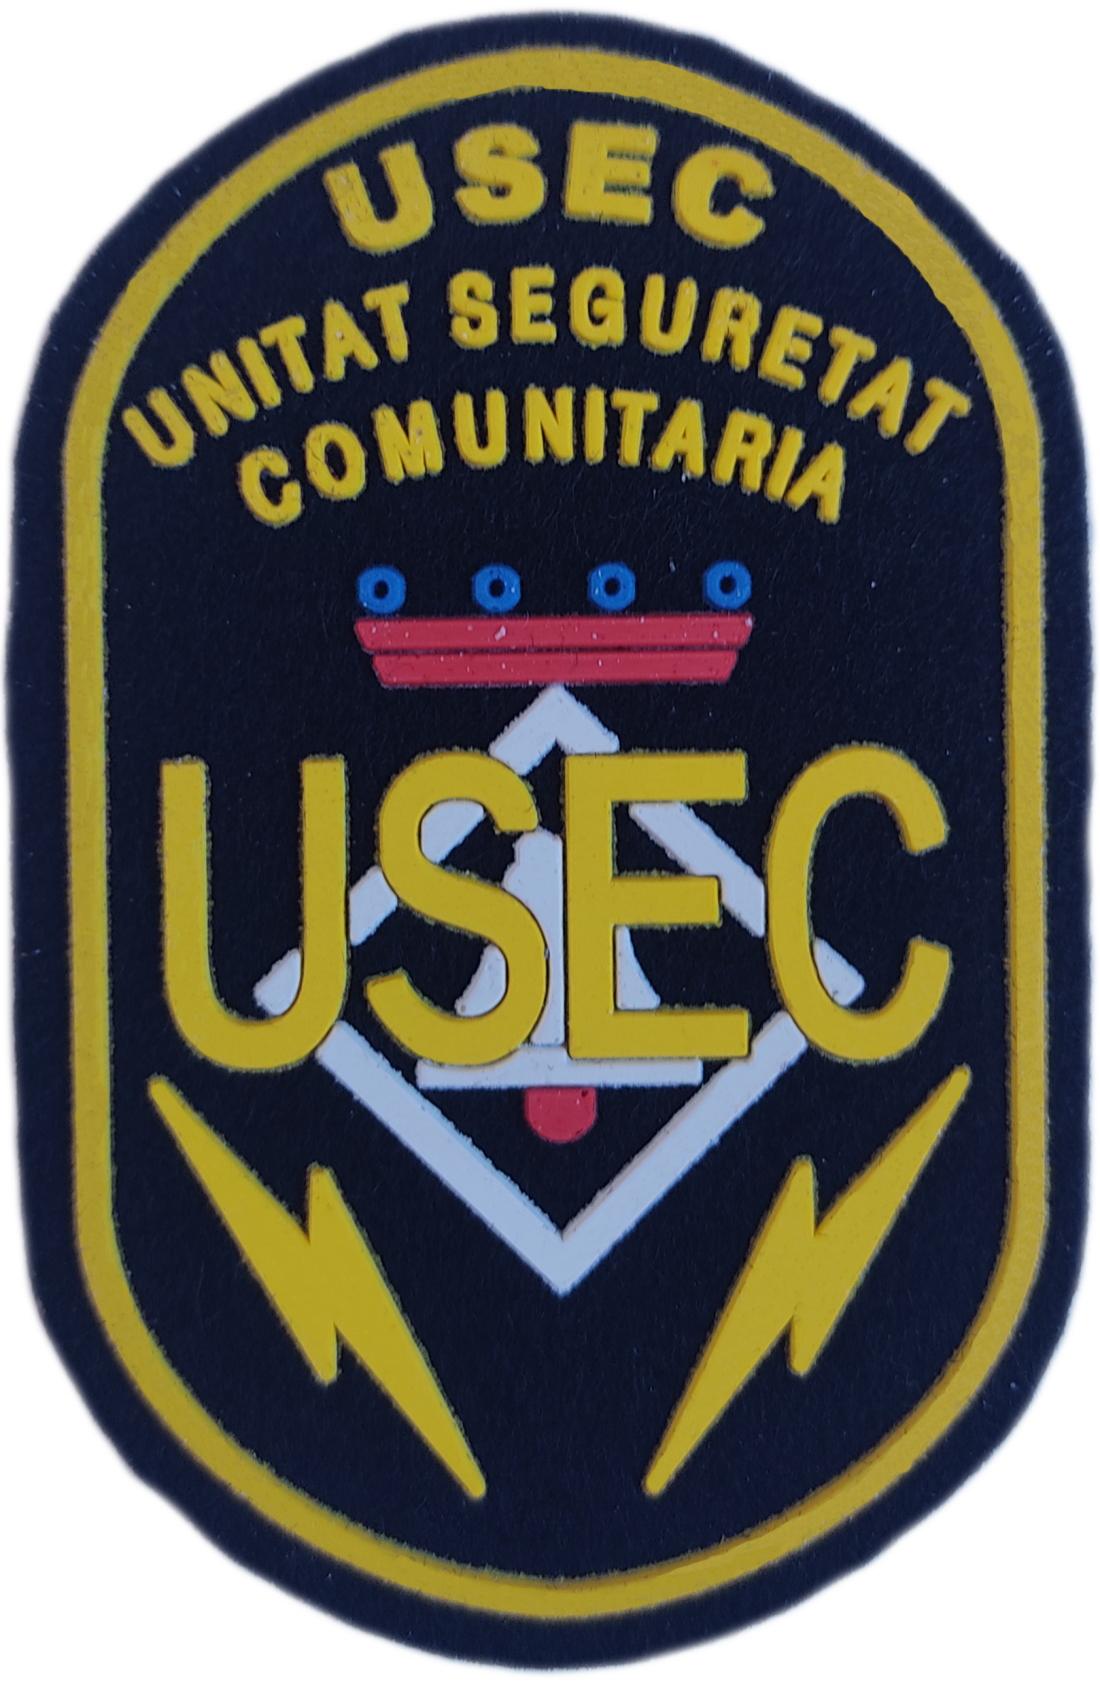 Policía Local Sant Boi de Llobregat USEC Unidad de Seguridad Comunitaria Unitat Cataluña parche insignia emblema distintivo Police Dept